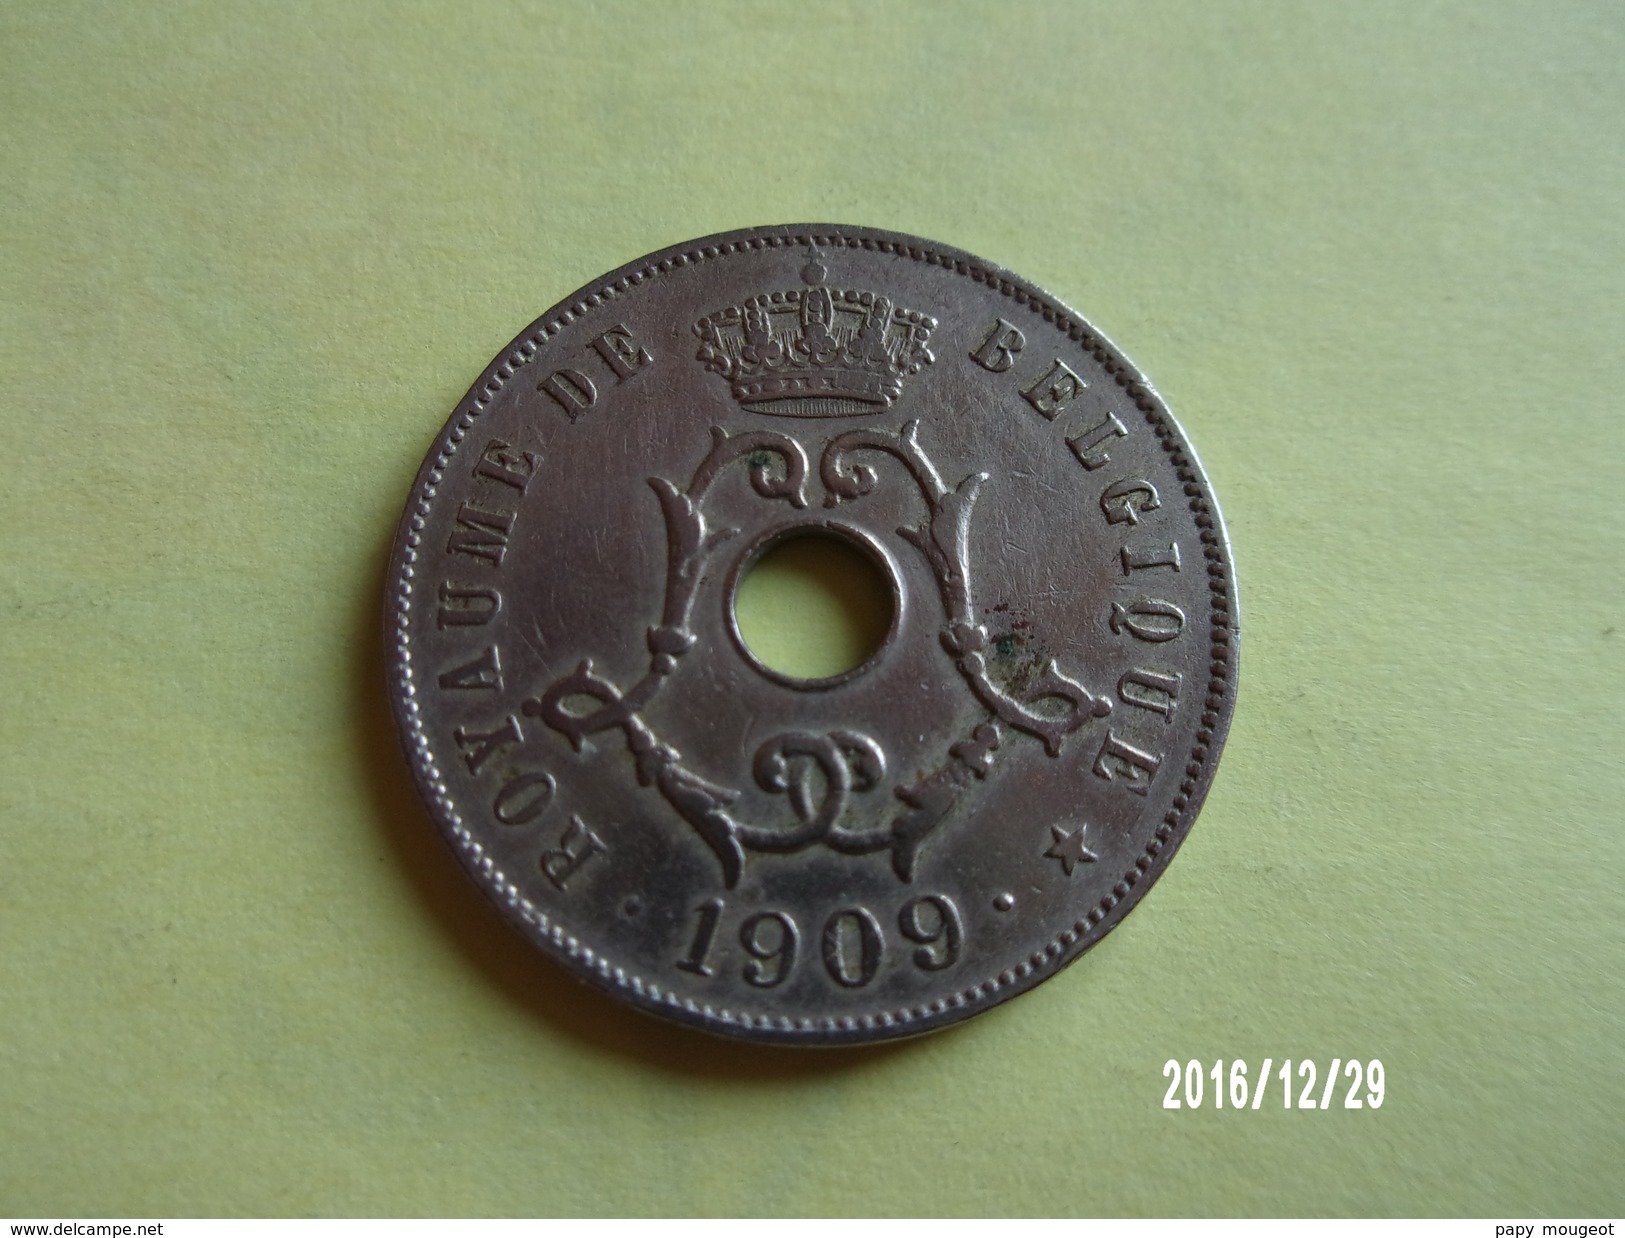 KM 62 - 25 Centimes - 1909 - 25 Centimes